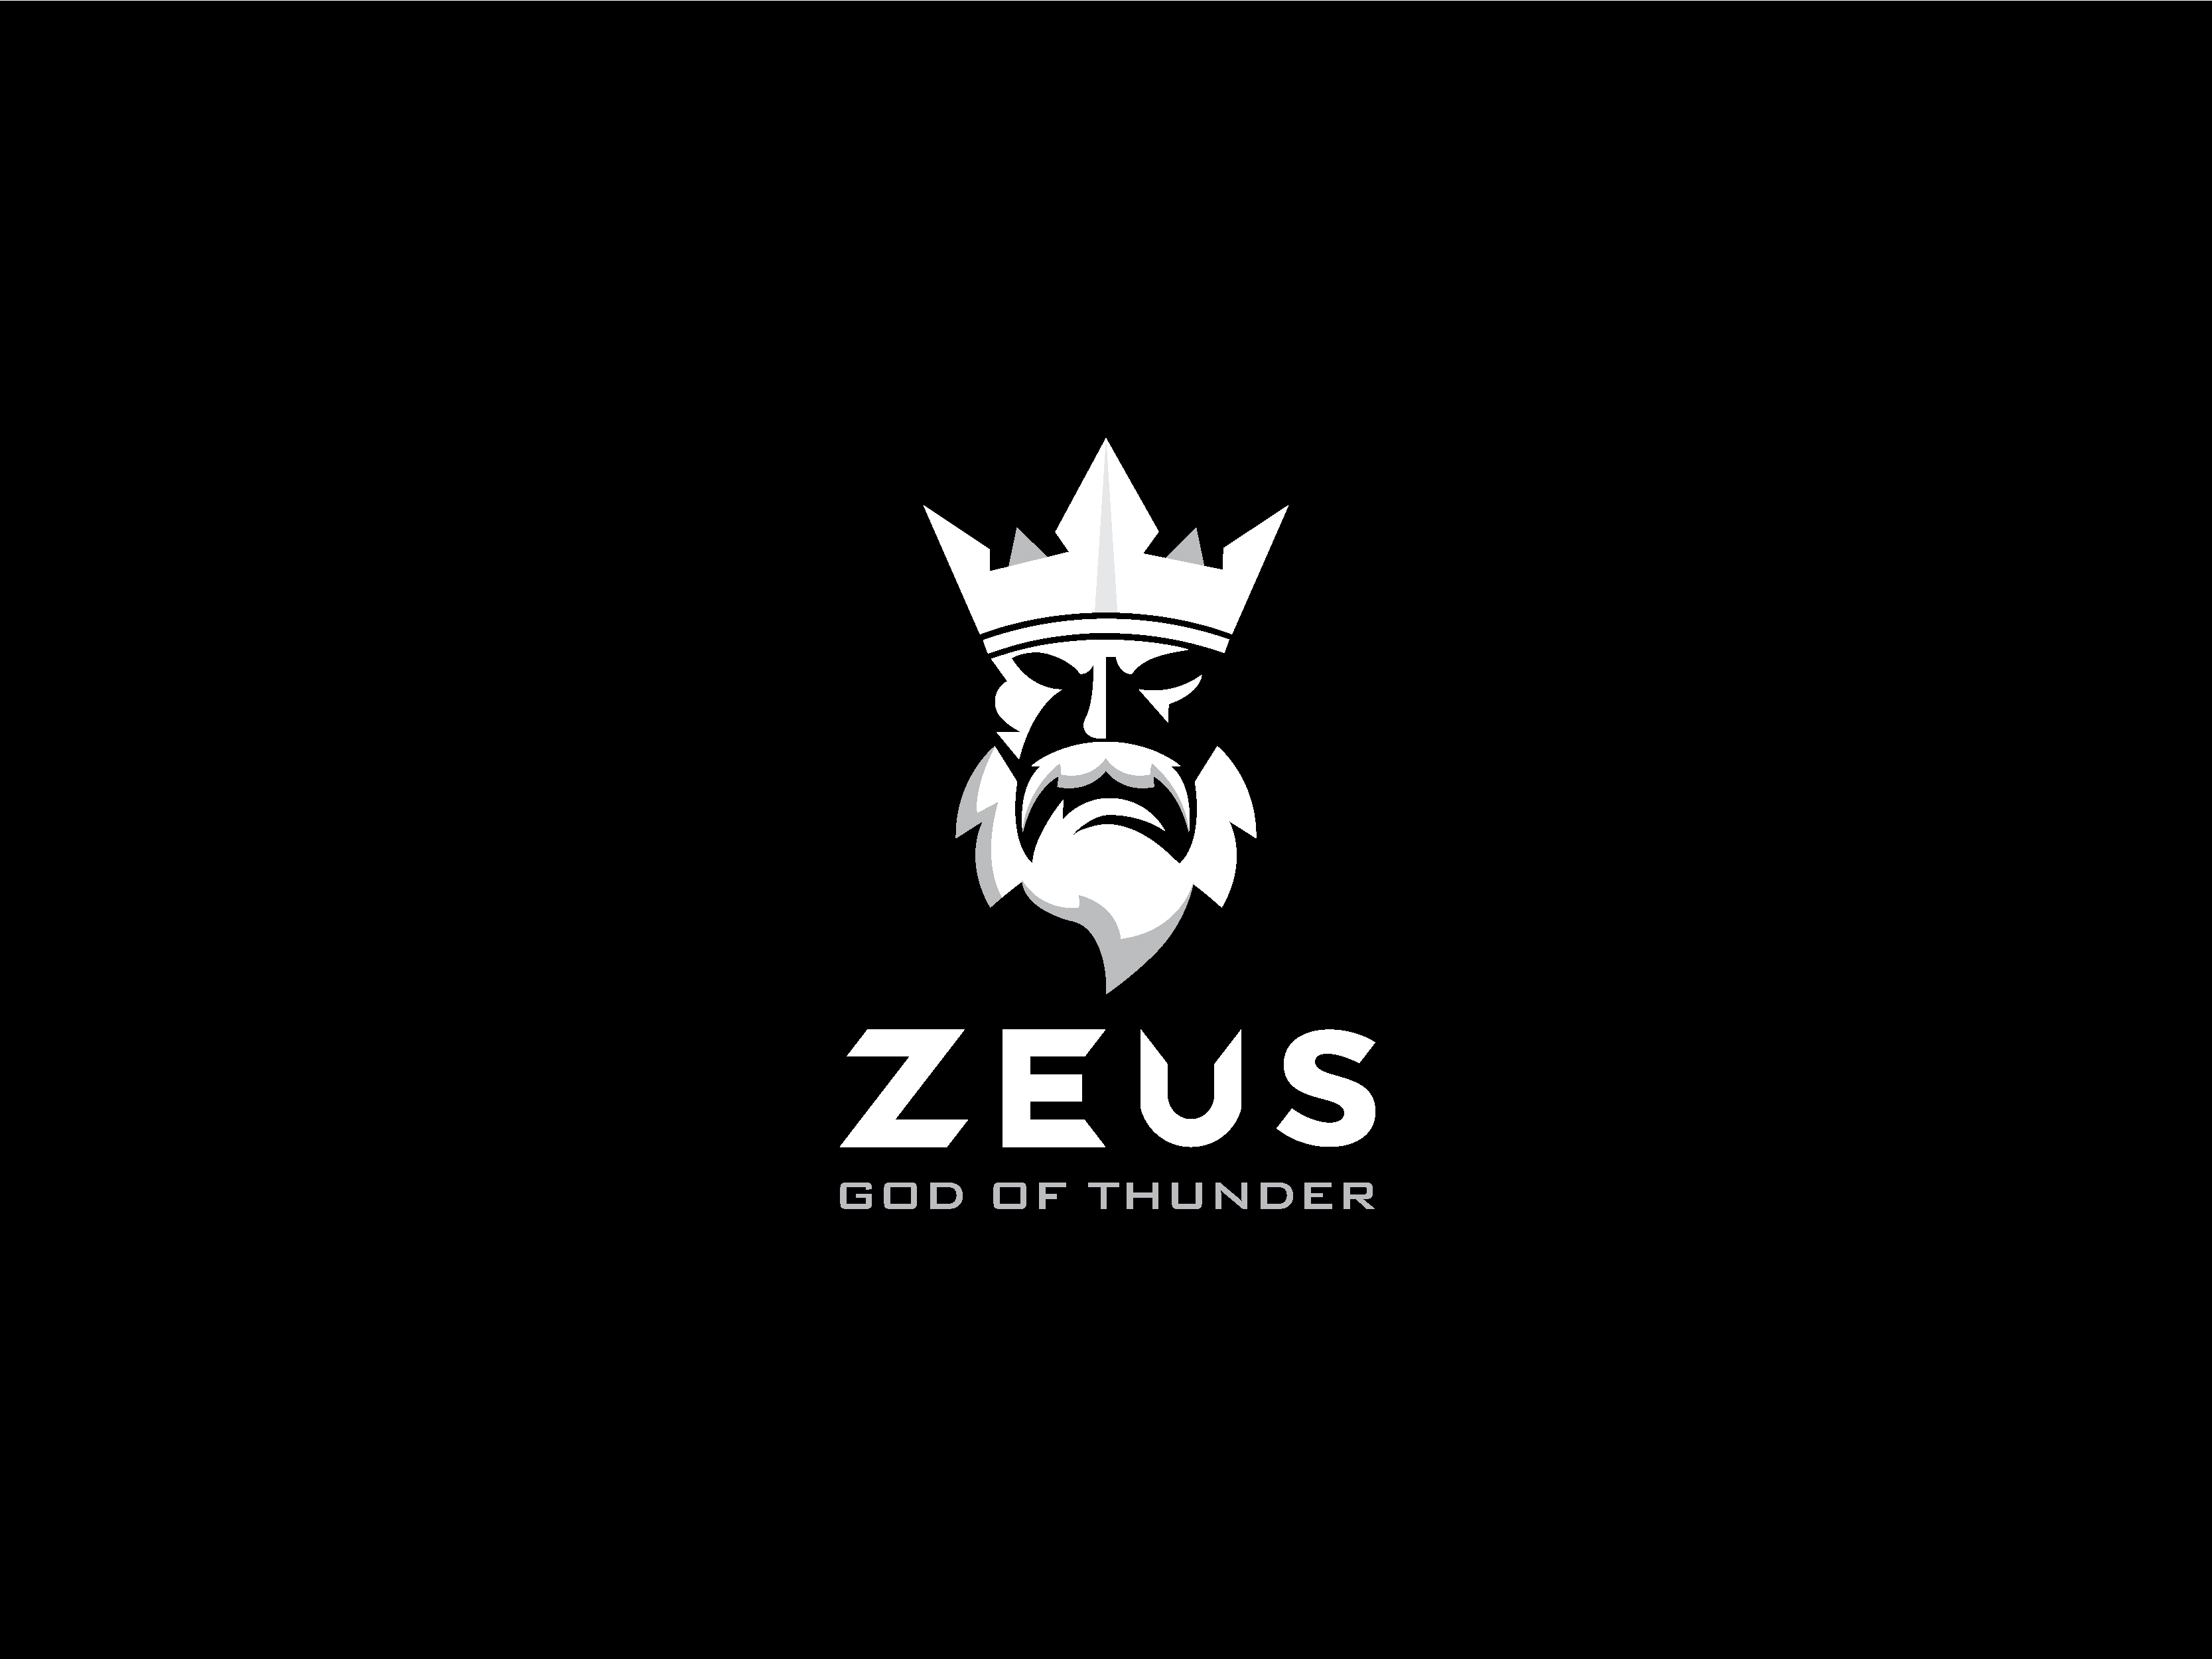 Zeus Logo Cliparts, Stock Vector and Royalty Free Zeus Logo Illustrations